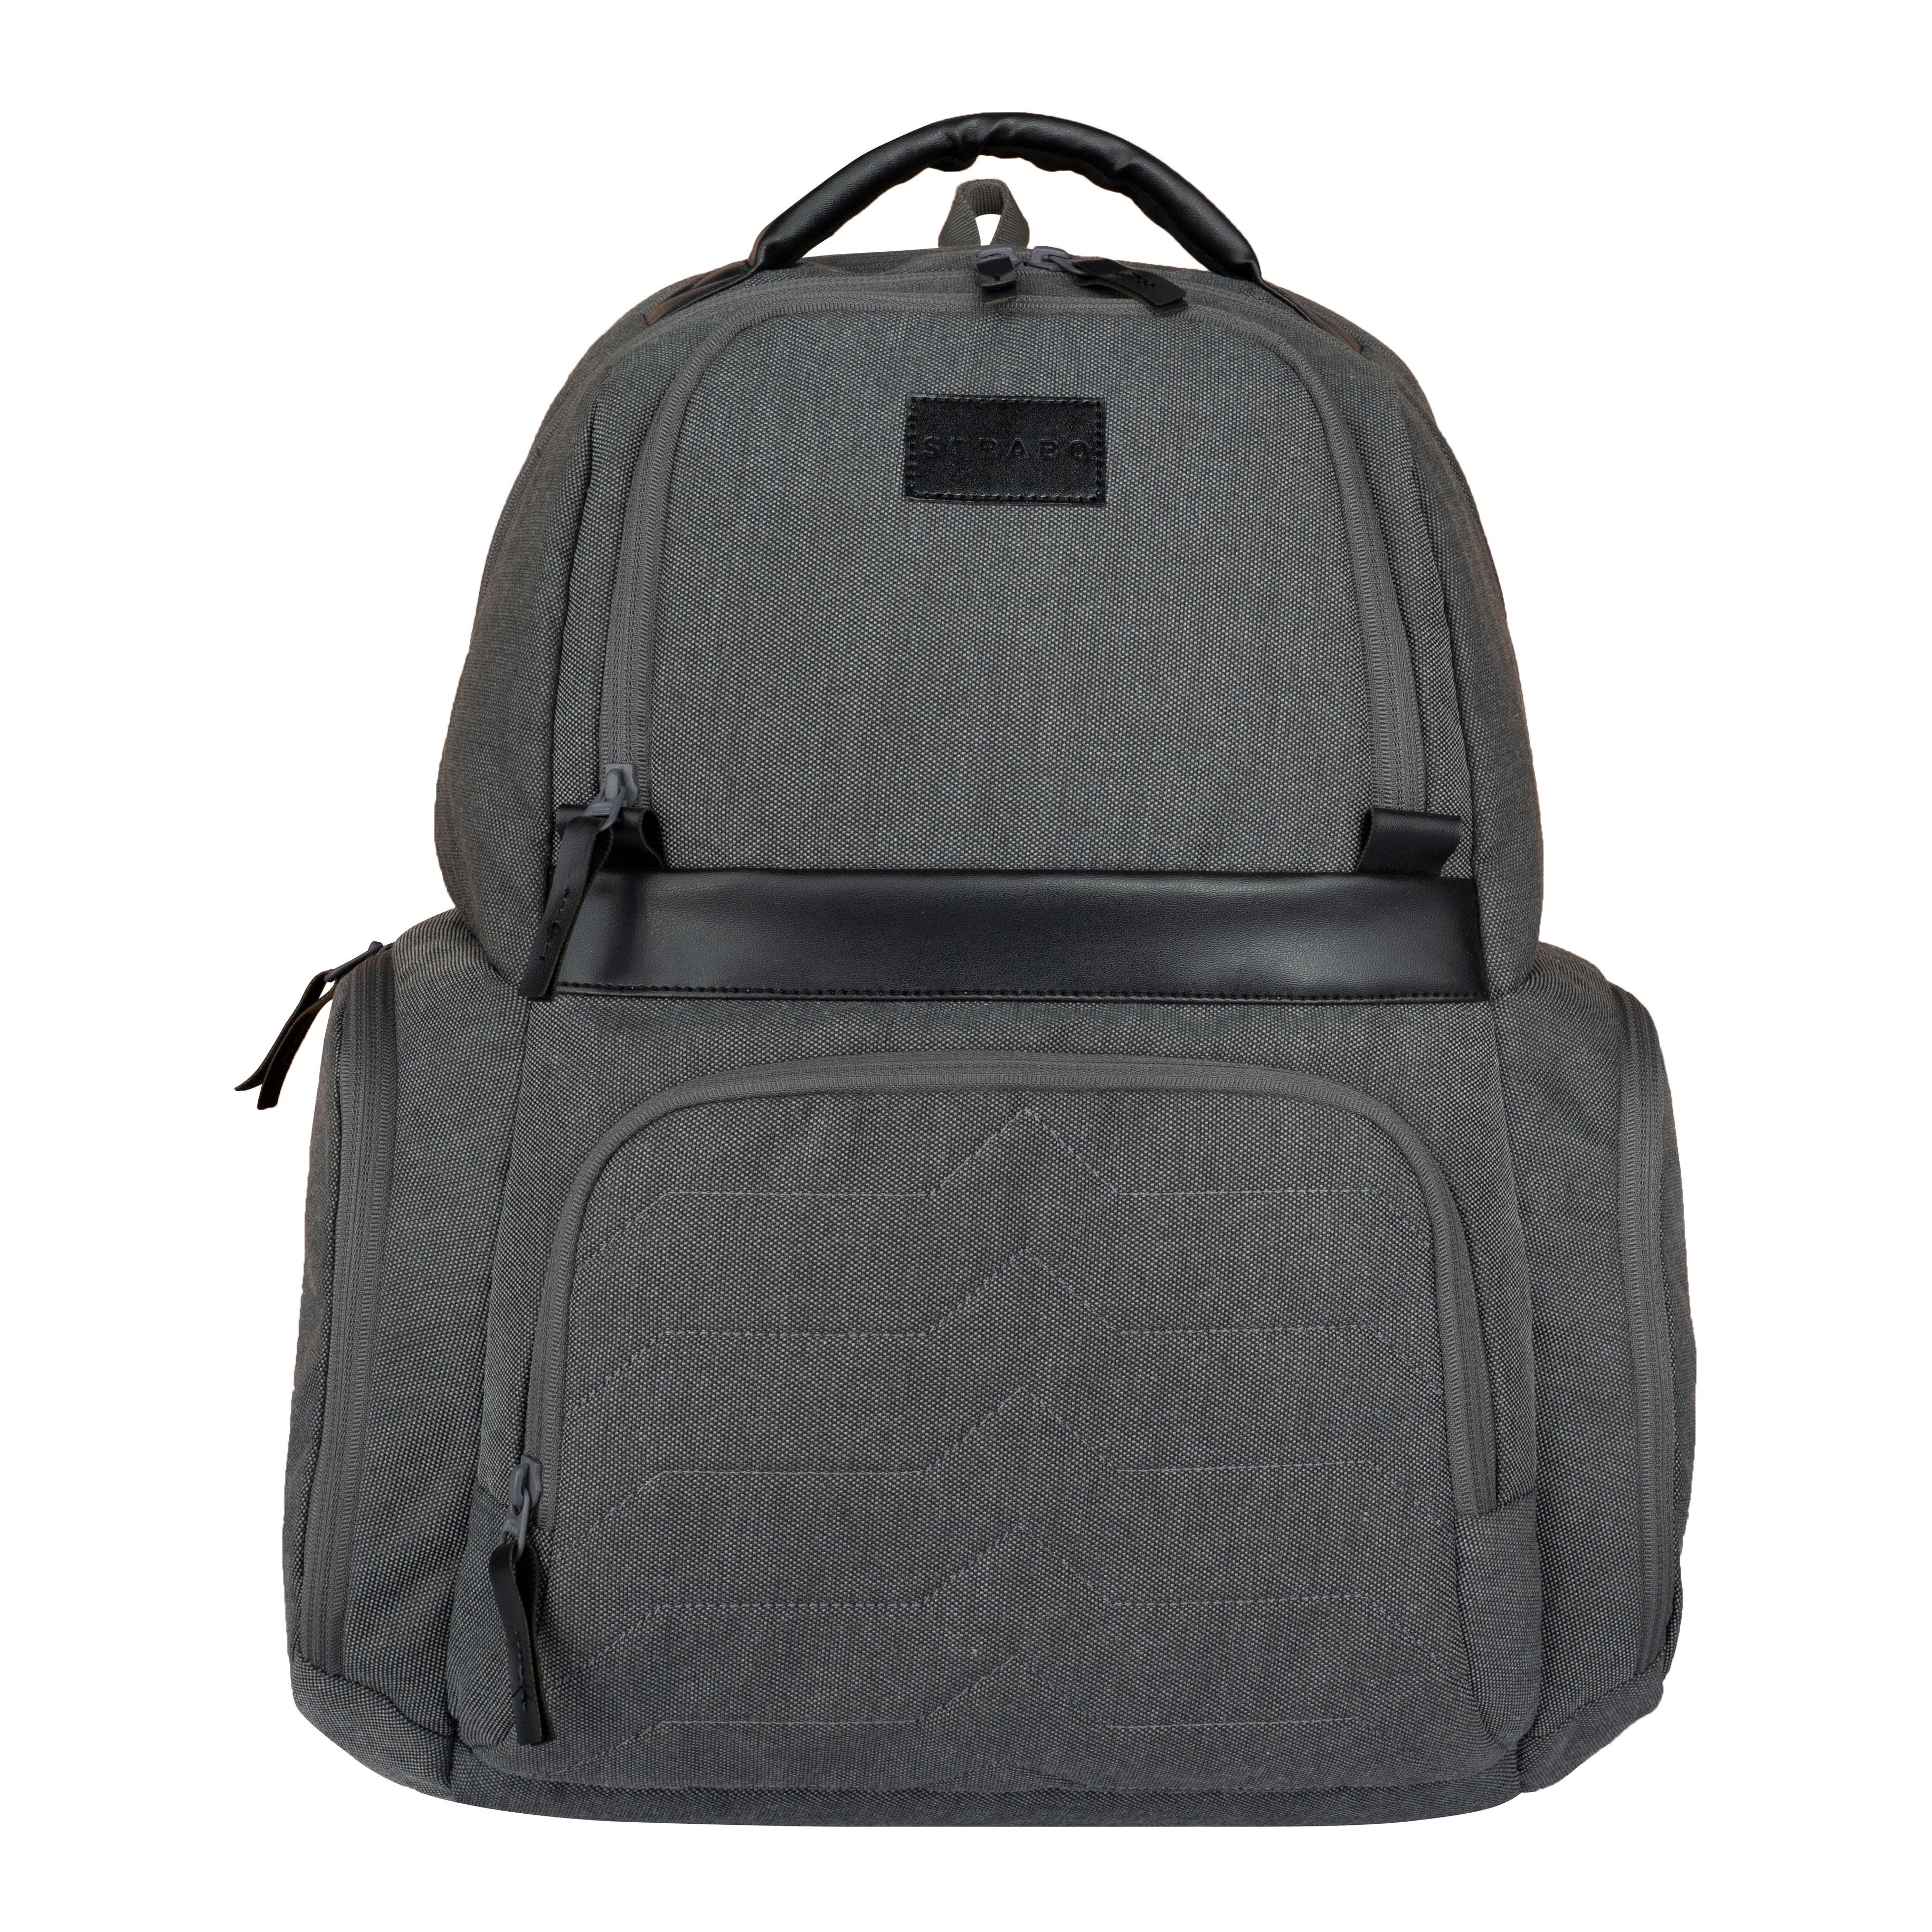 Buy Fringe LEATHER Purse BLACK Crossbody Leather Bag With Tassels Boho Bag  Lined Hobo Bag Women's Handbag Leather Laptop Bag Online in India - Etsy